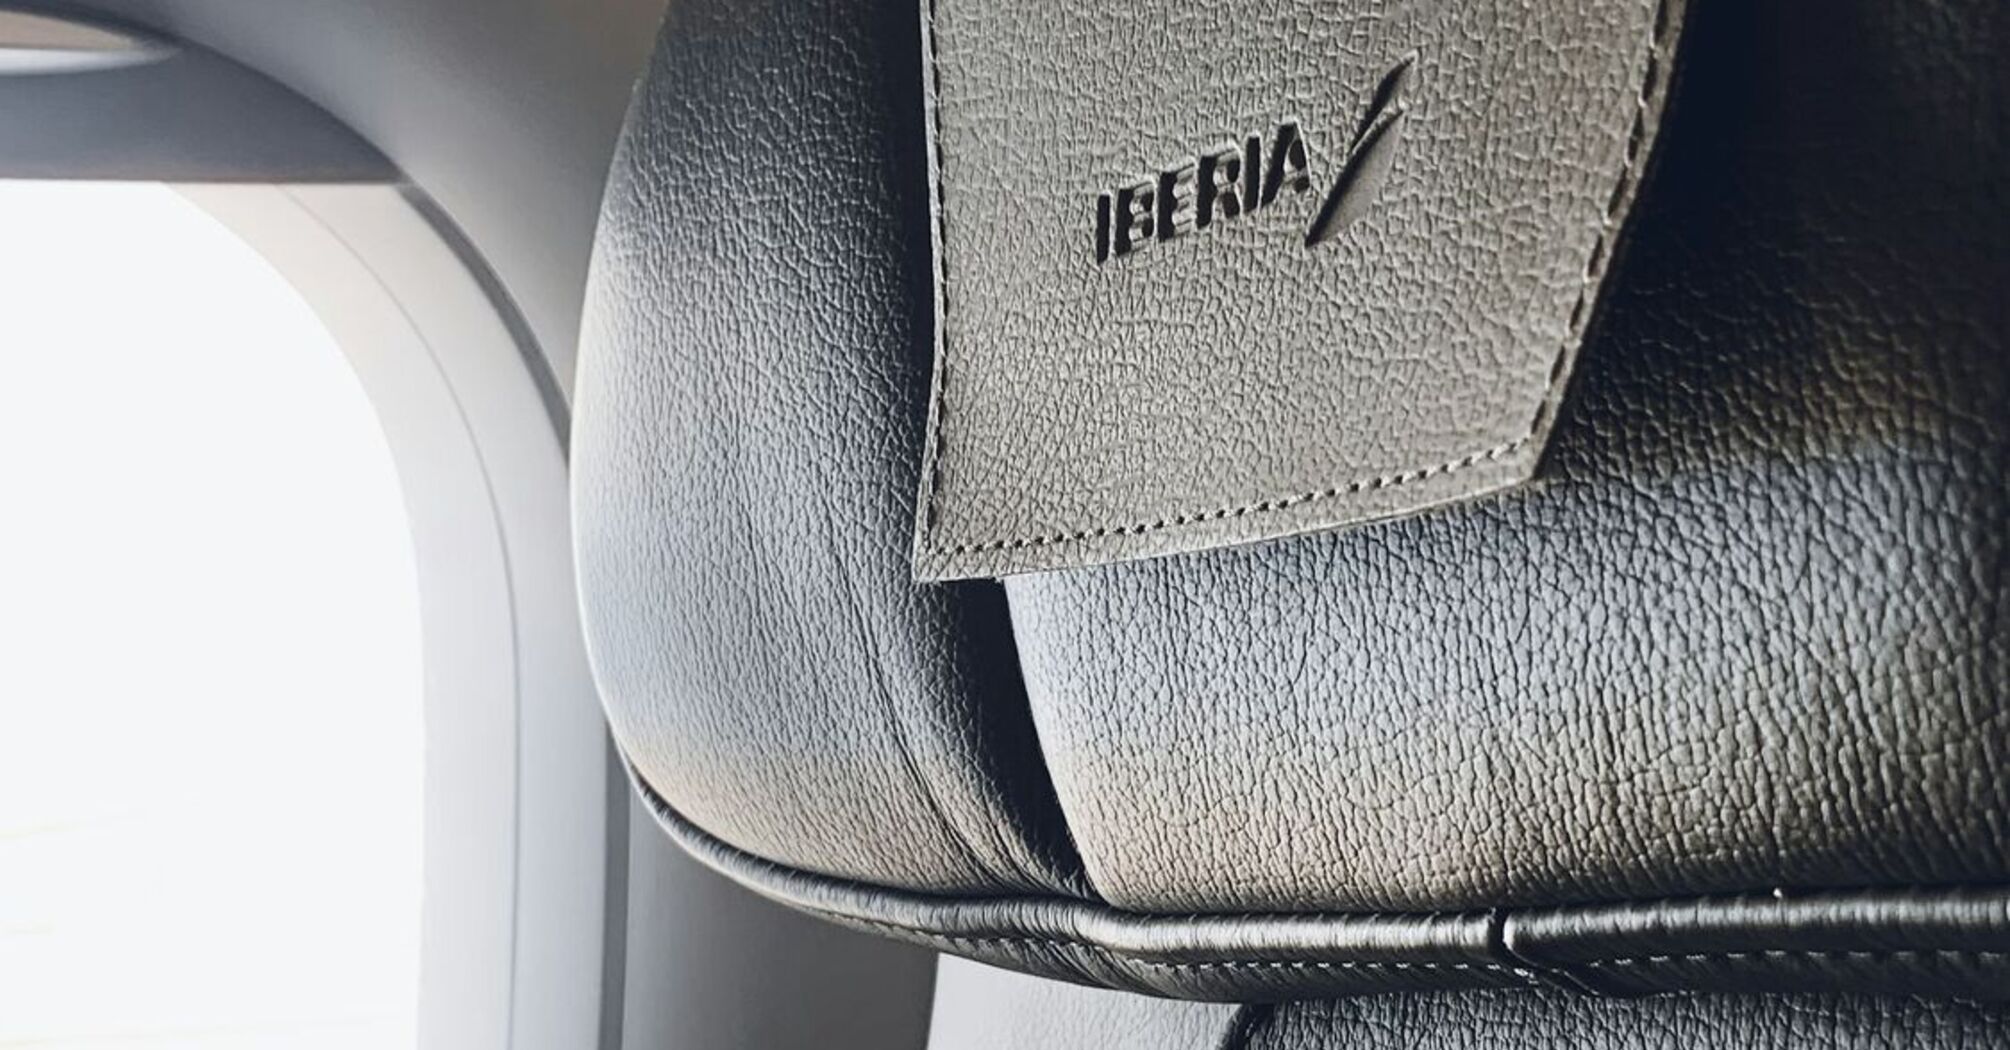 Iberia airplane seat with logo